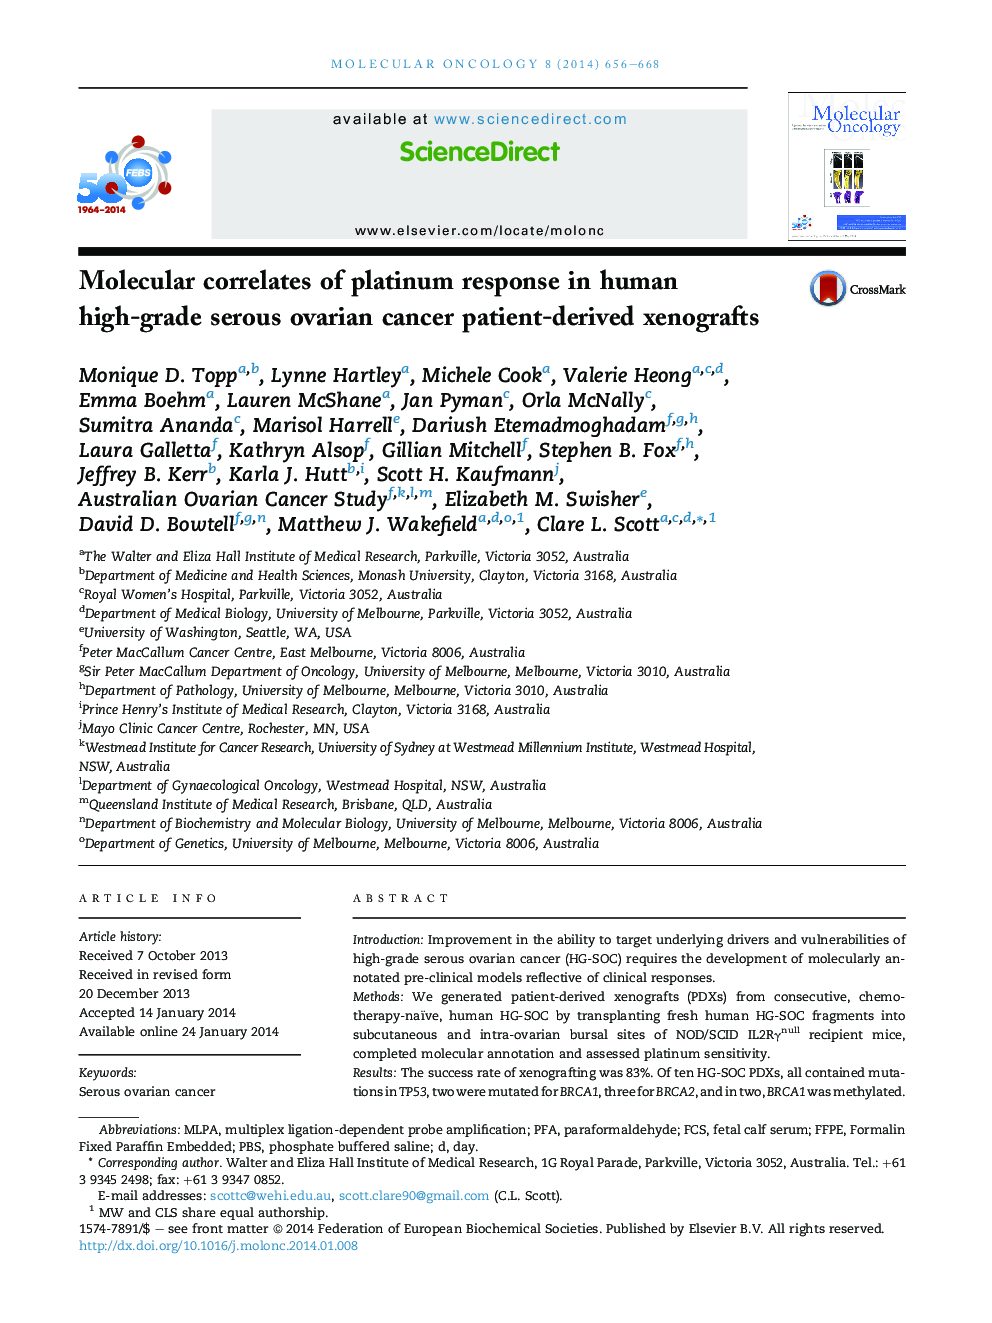 Molecular correlates of platinum response in human high-grade serous ovarian cancer patient-derived xenografts